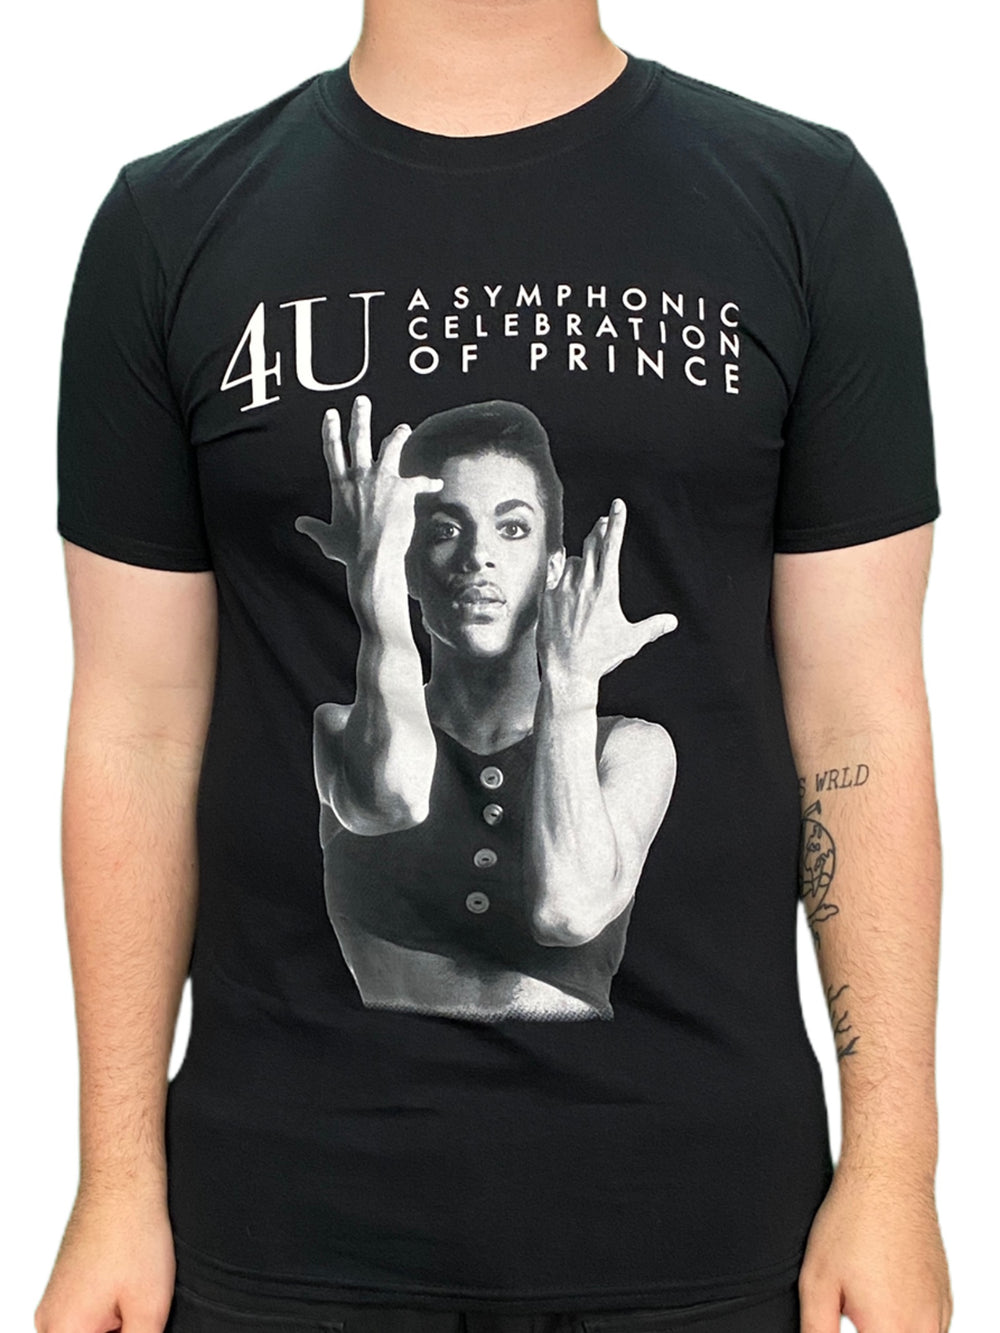 Prince – Official 4U A Symphonic Celebration Unisex T Shirt MEDIUM